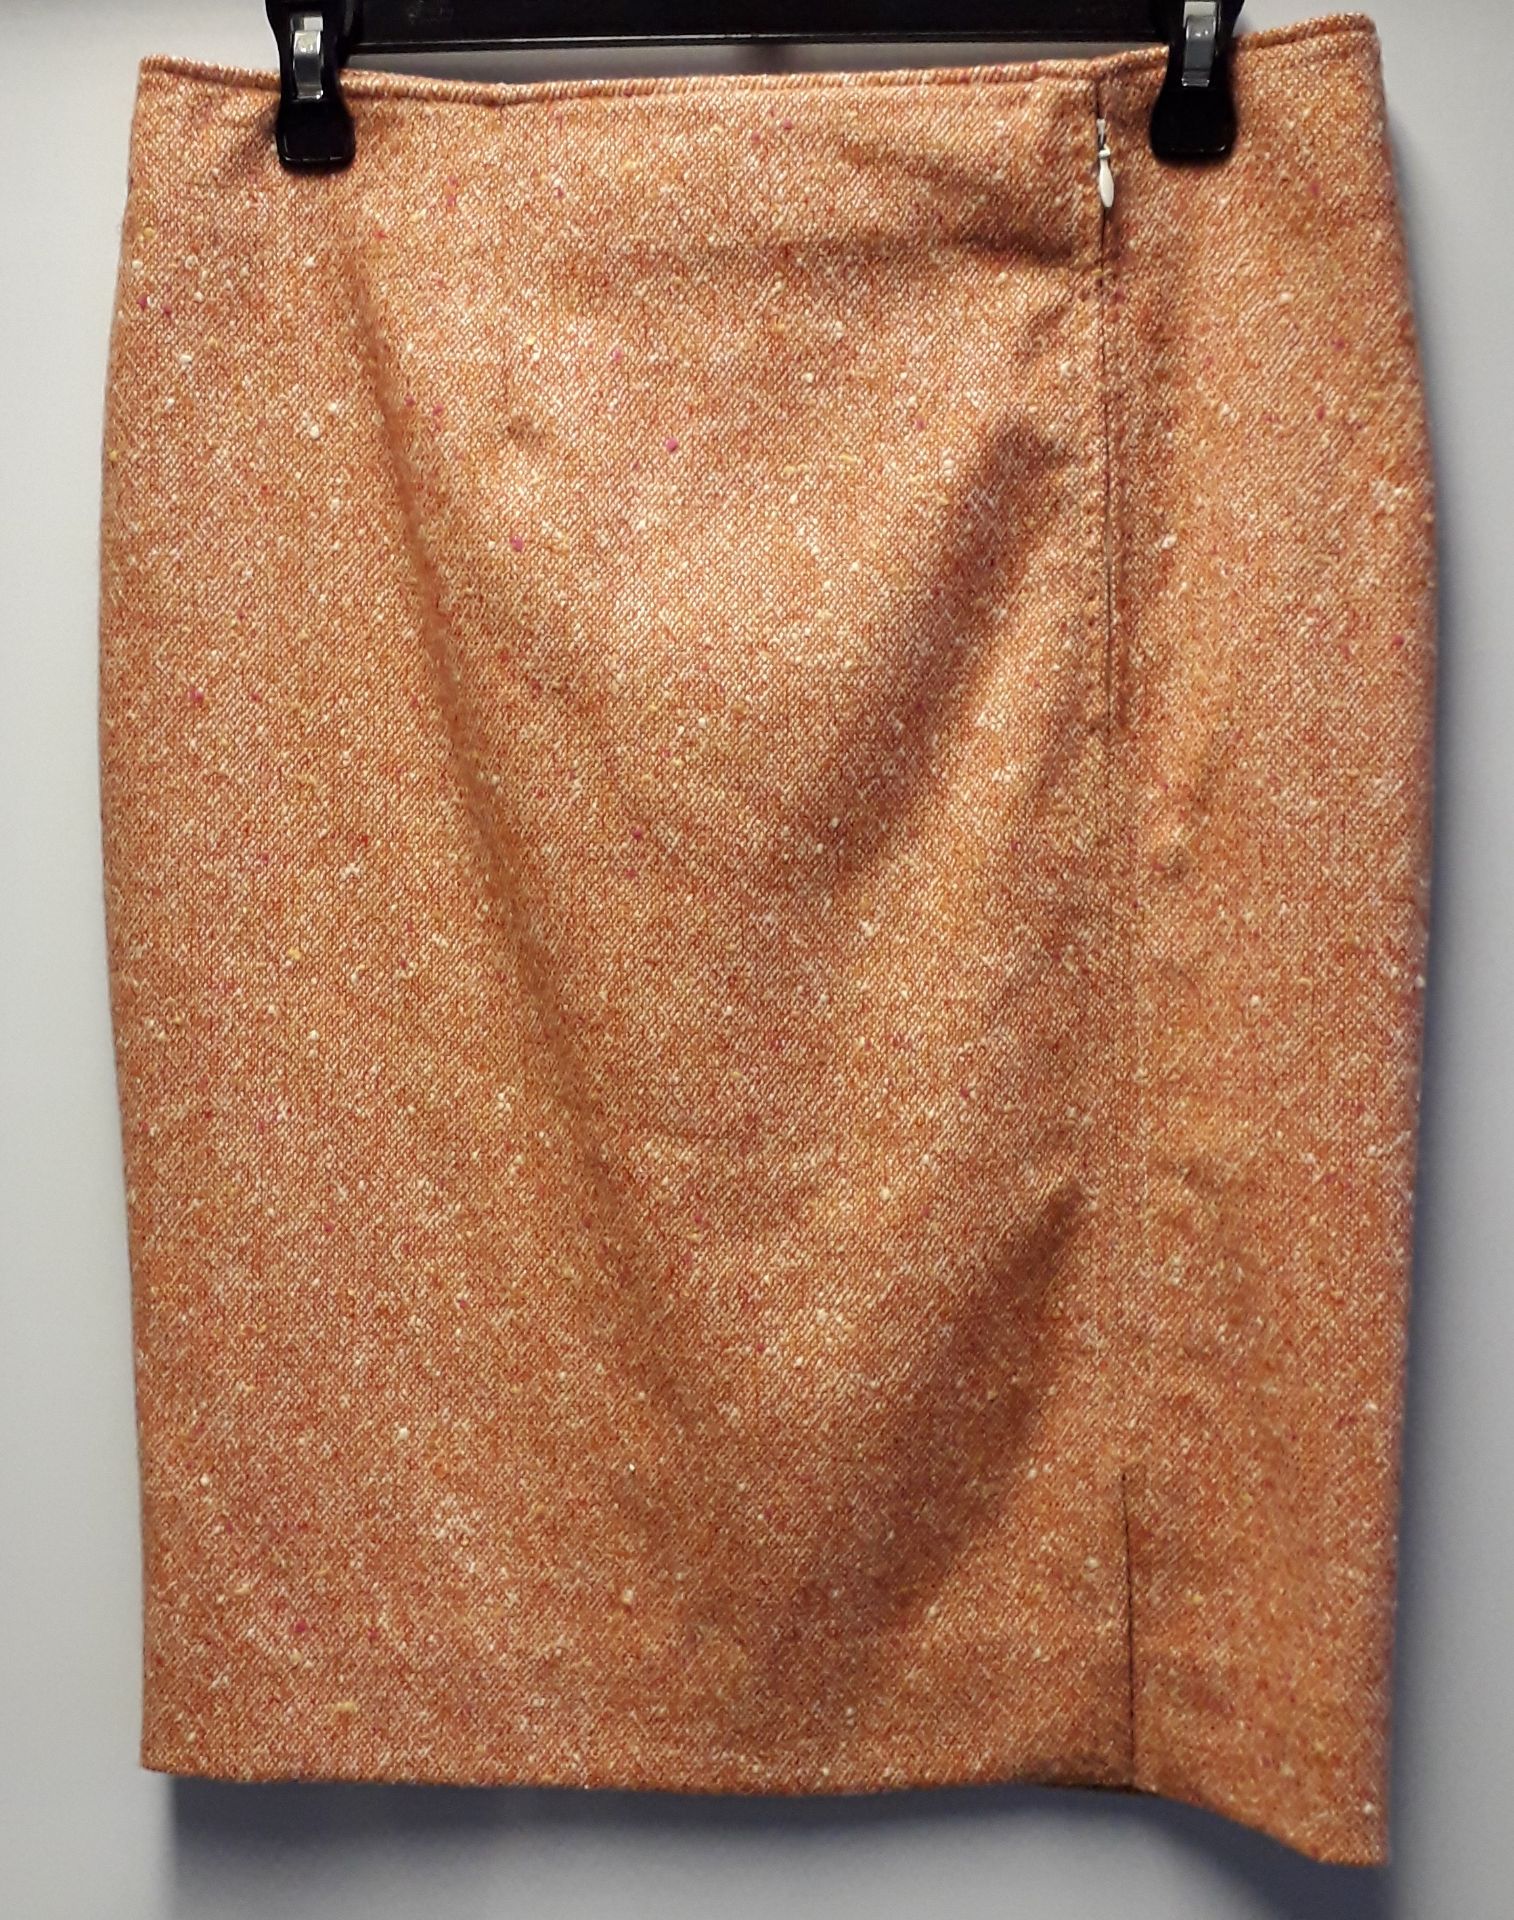 1 x Jc De Castlebajac Paris Tangerine Pencil Skirt - Size: 46 - Material: Lining 68% Acetate, 32%